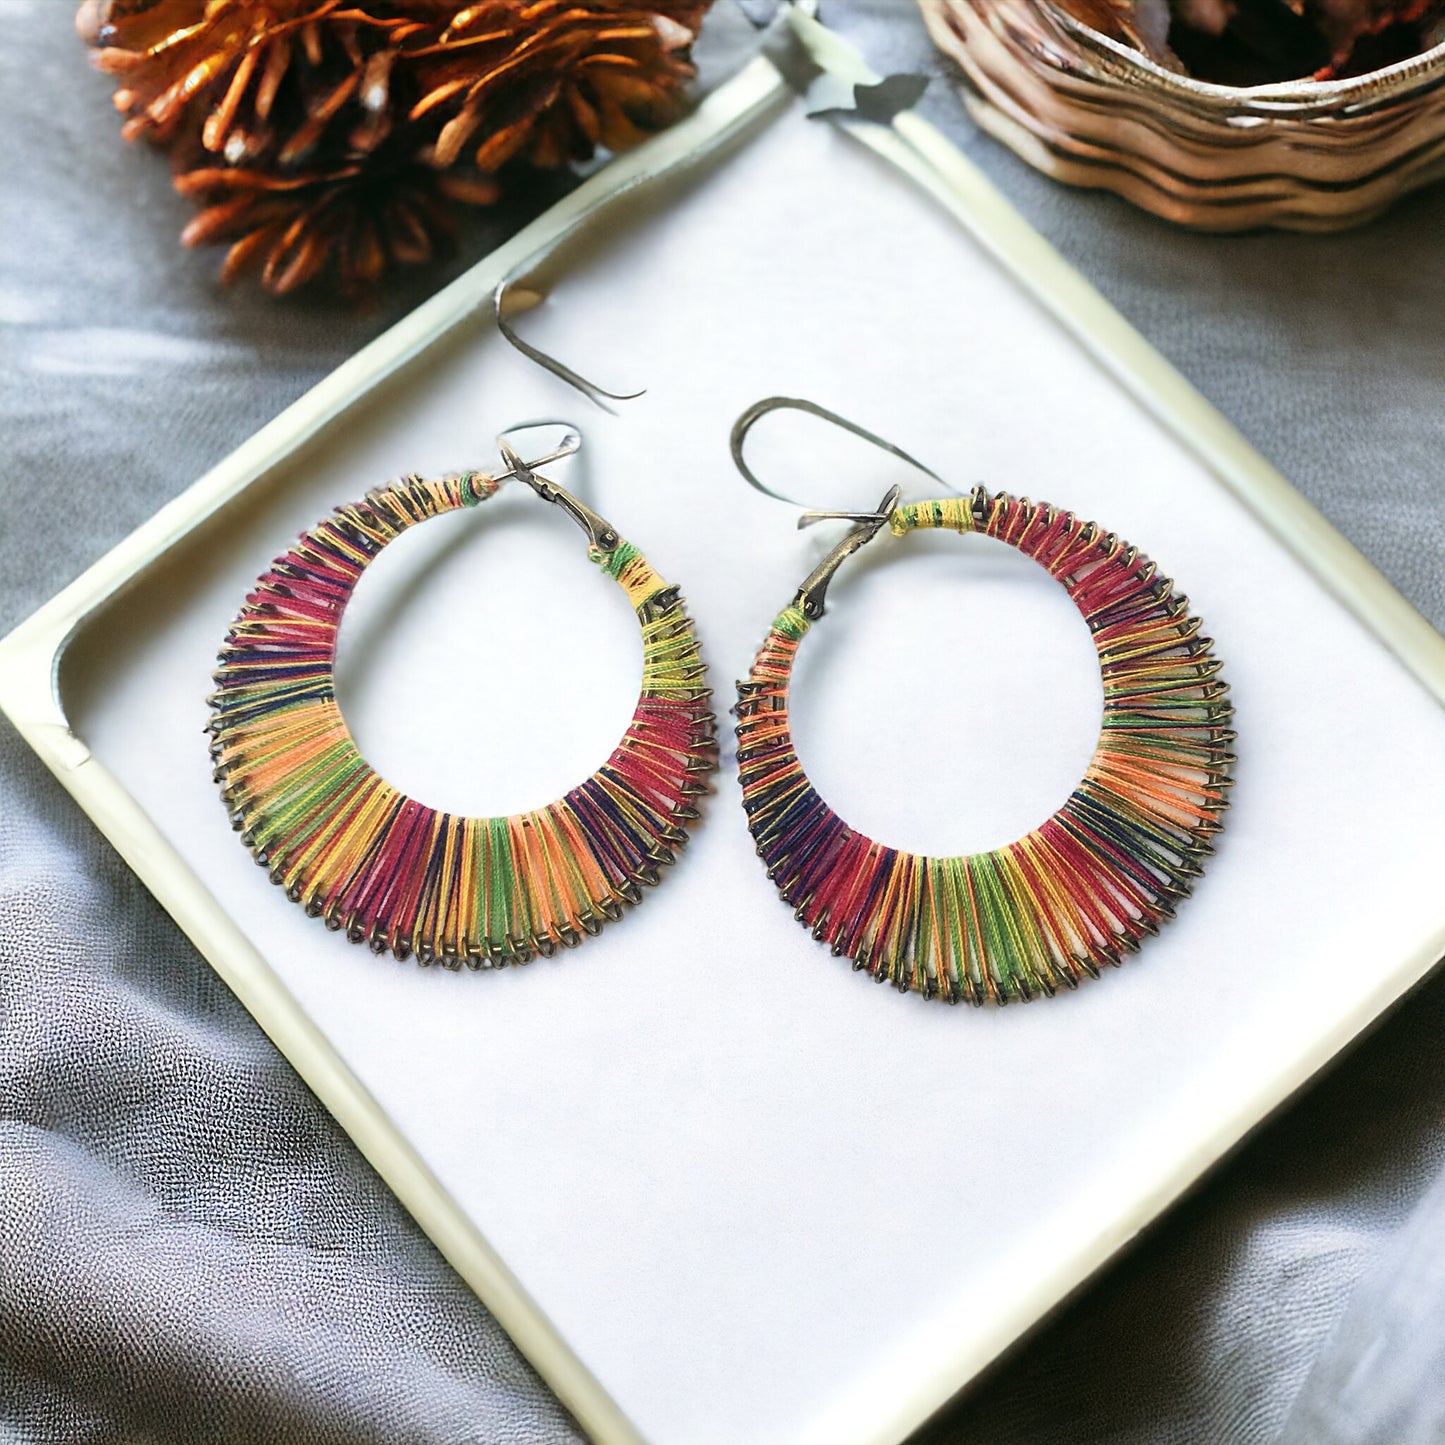 Multi-Colored String Hoop Earrings - Vibrant & Playful Accessories